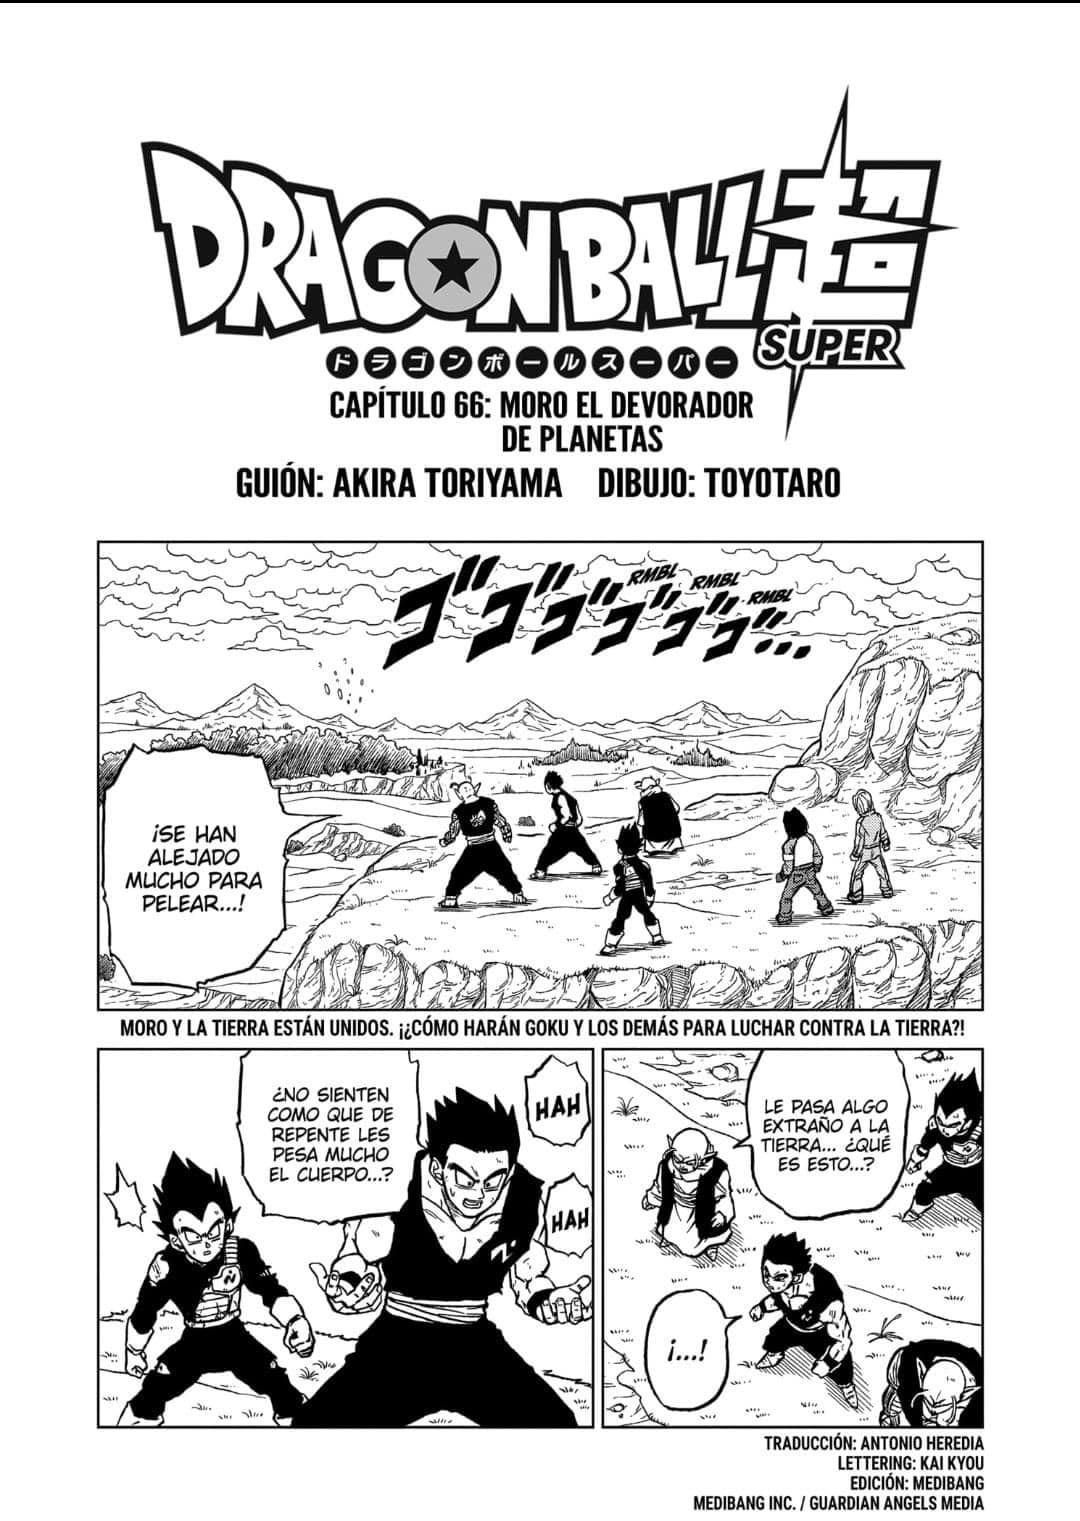 Manga Dragon Ball Super 66 Online - InManga